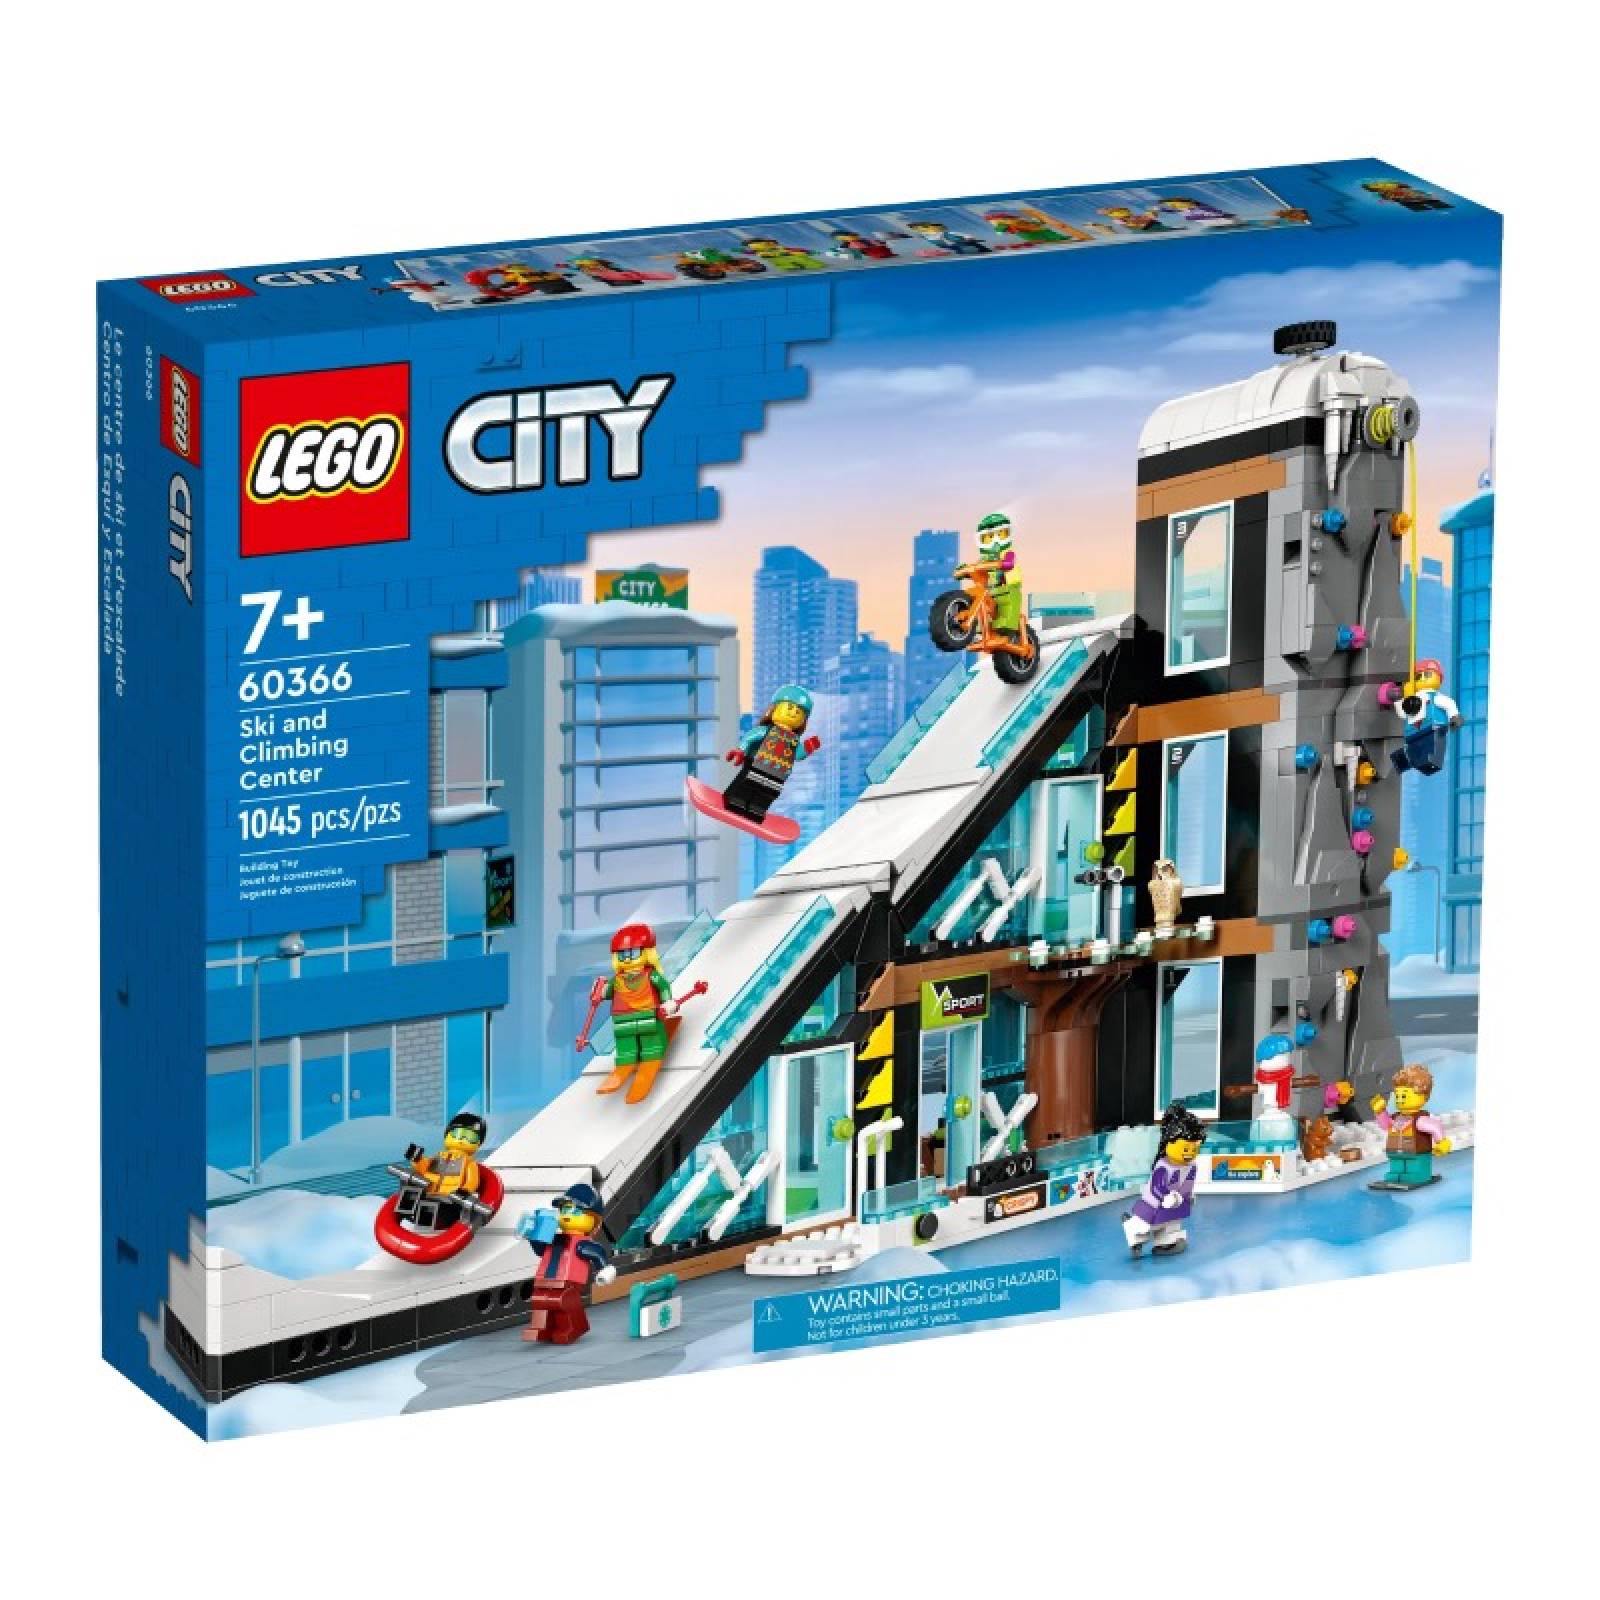 LEGO City Ski and Climbing Center 60366 7+